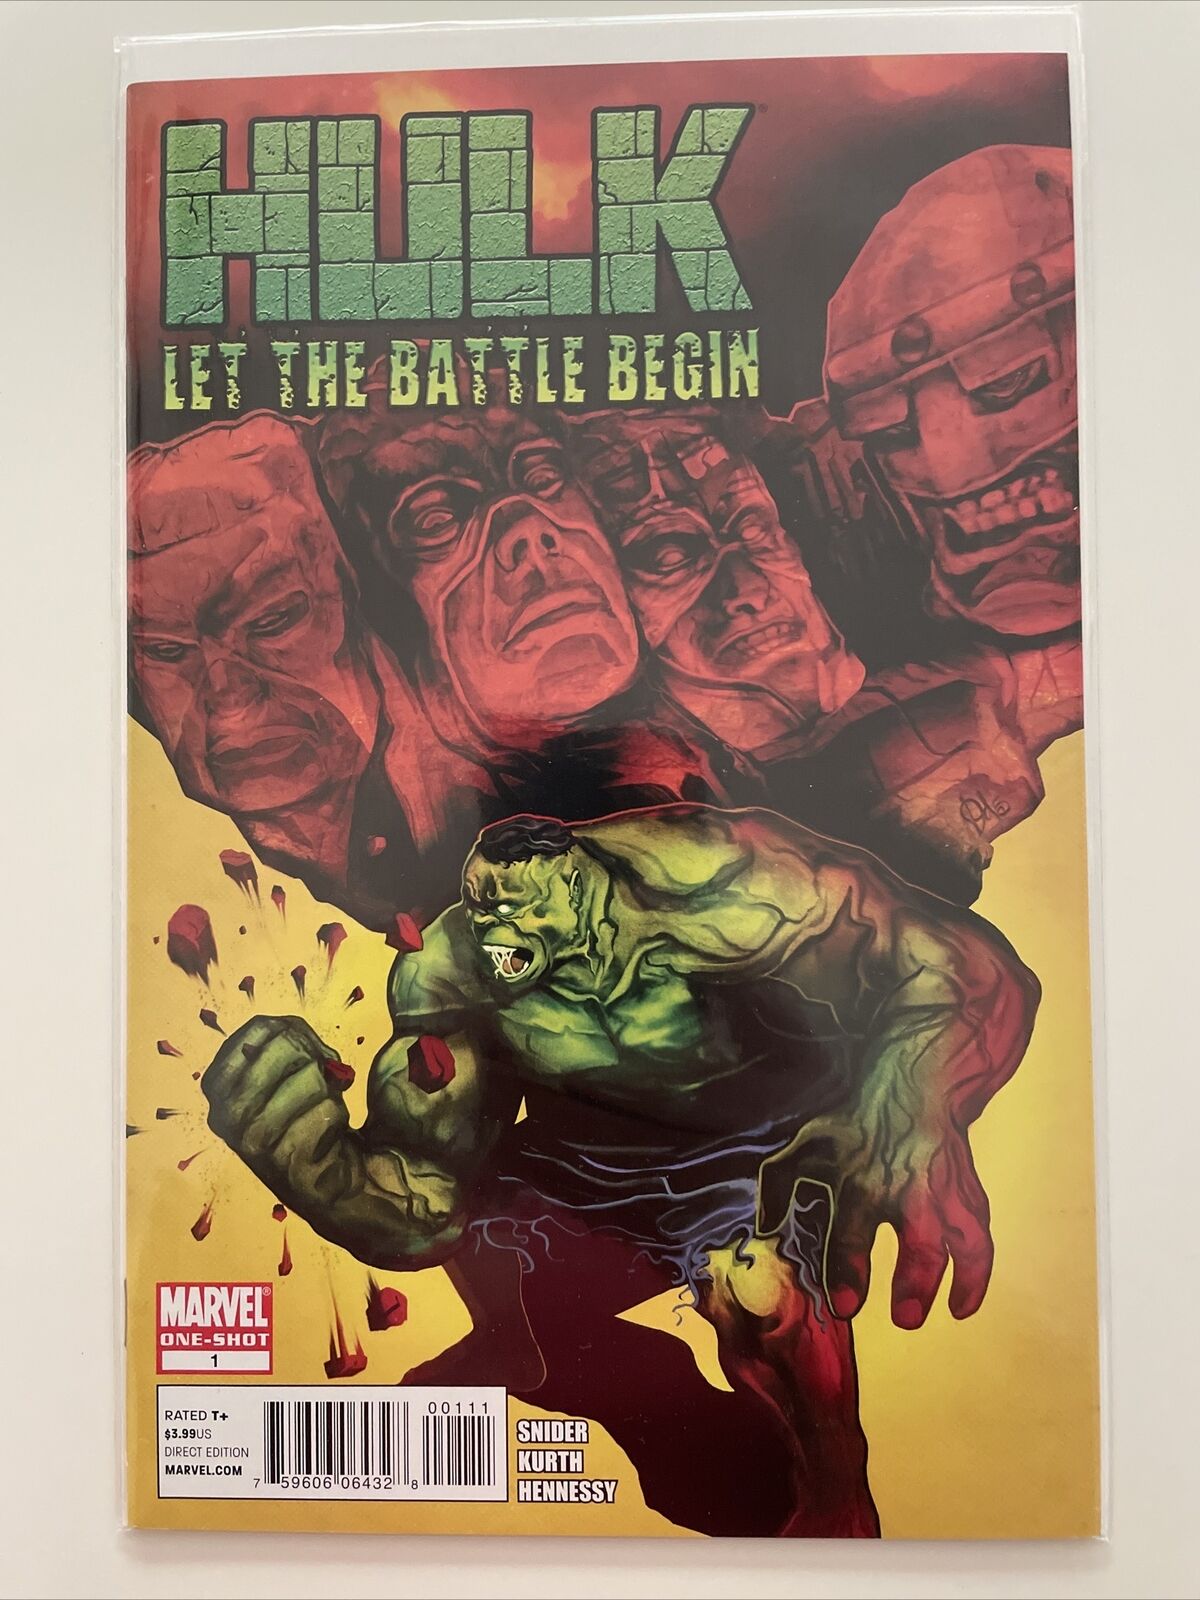 Hulk: Let the Battle Begin #1, Wrecking Crew one shot